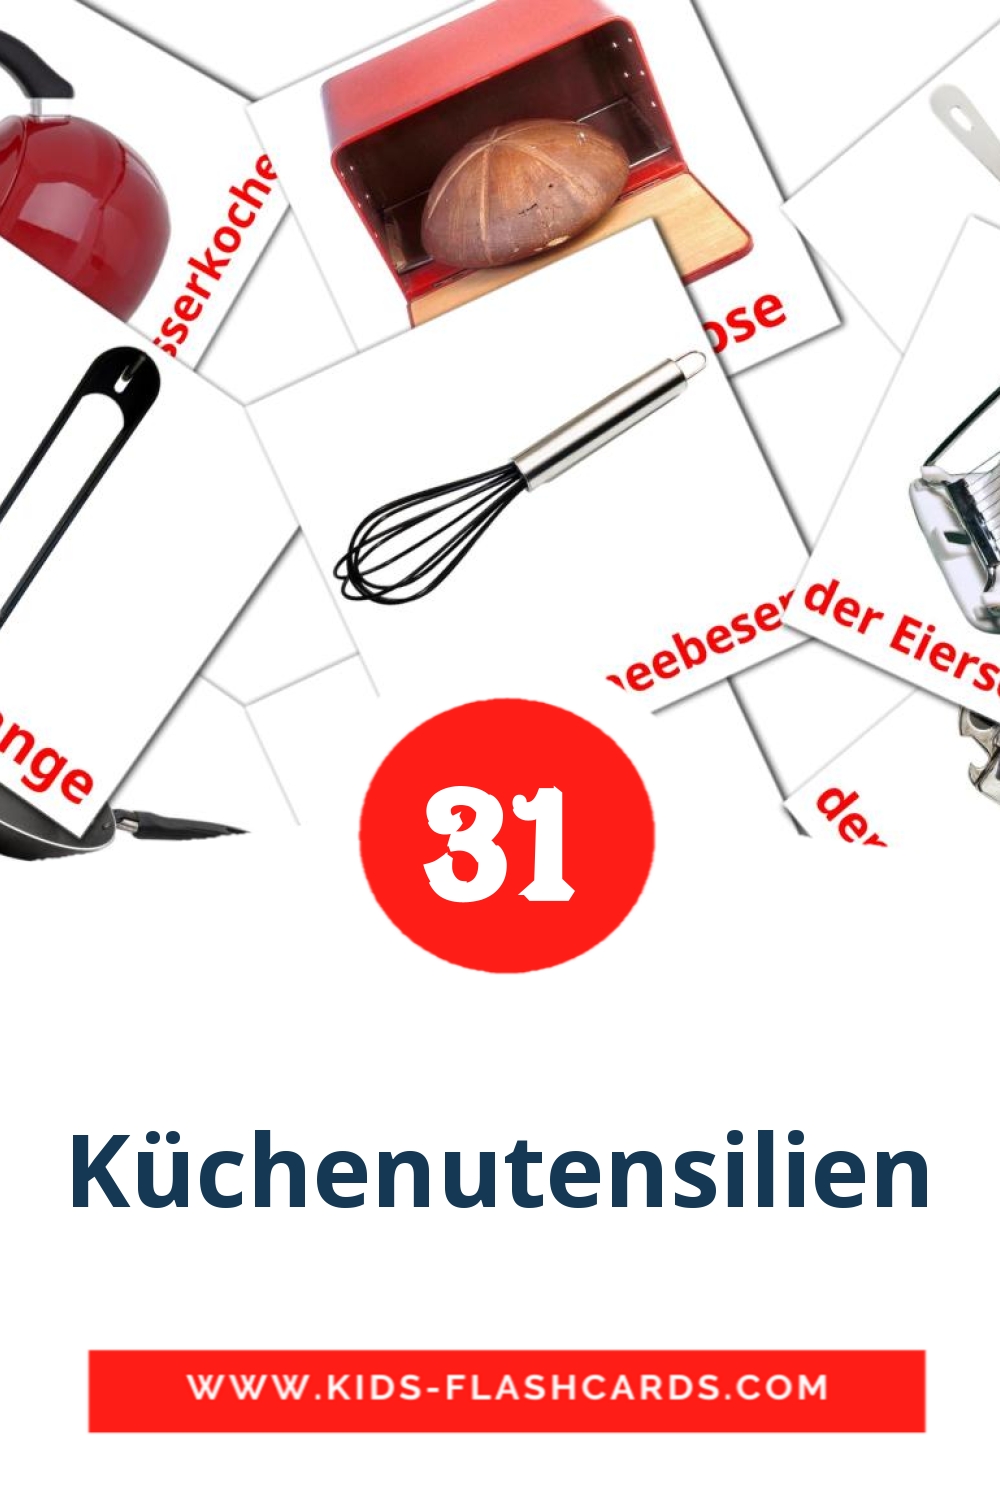 35 Küchenutensilien Picture Cards for Kindergarden in german